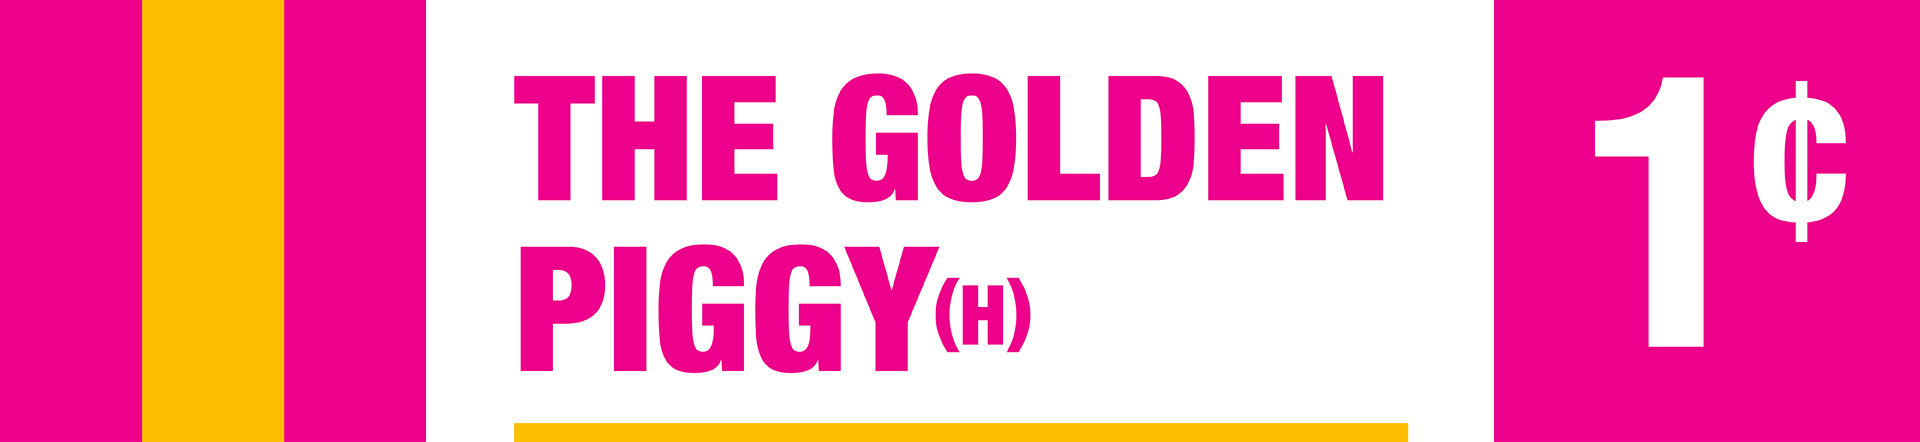 The Golden P iggy (H)